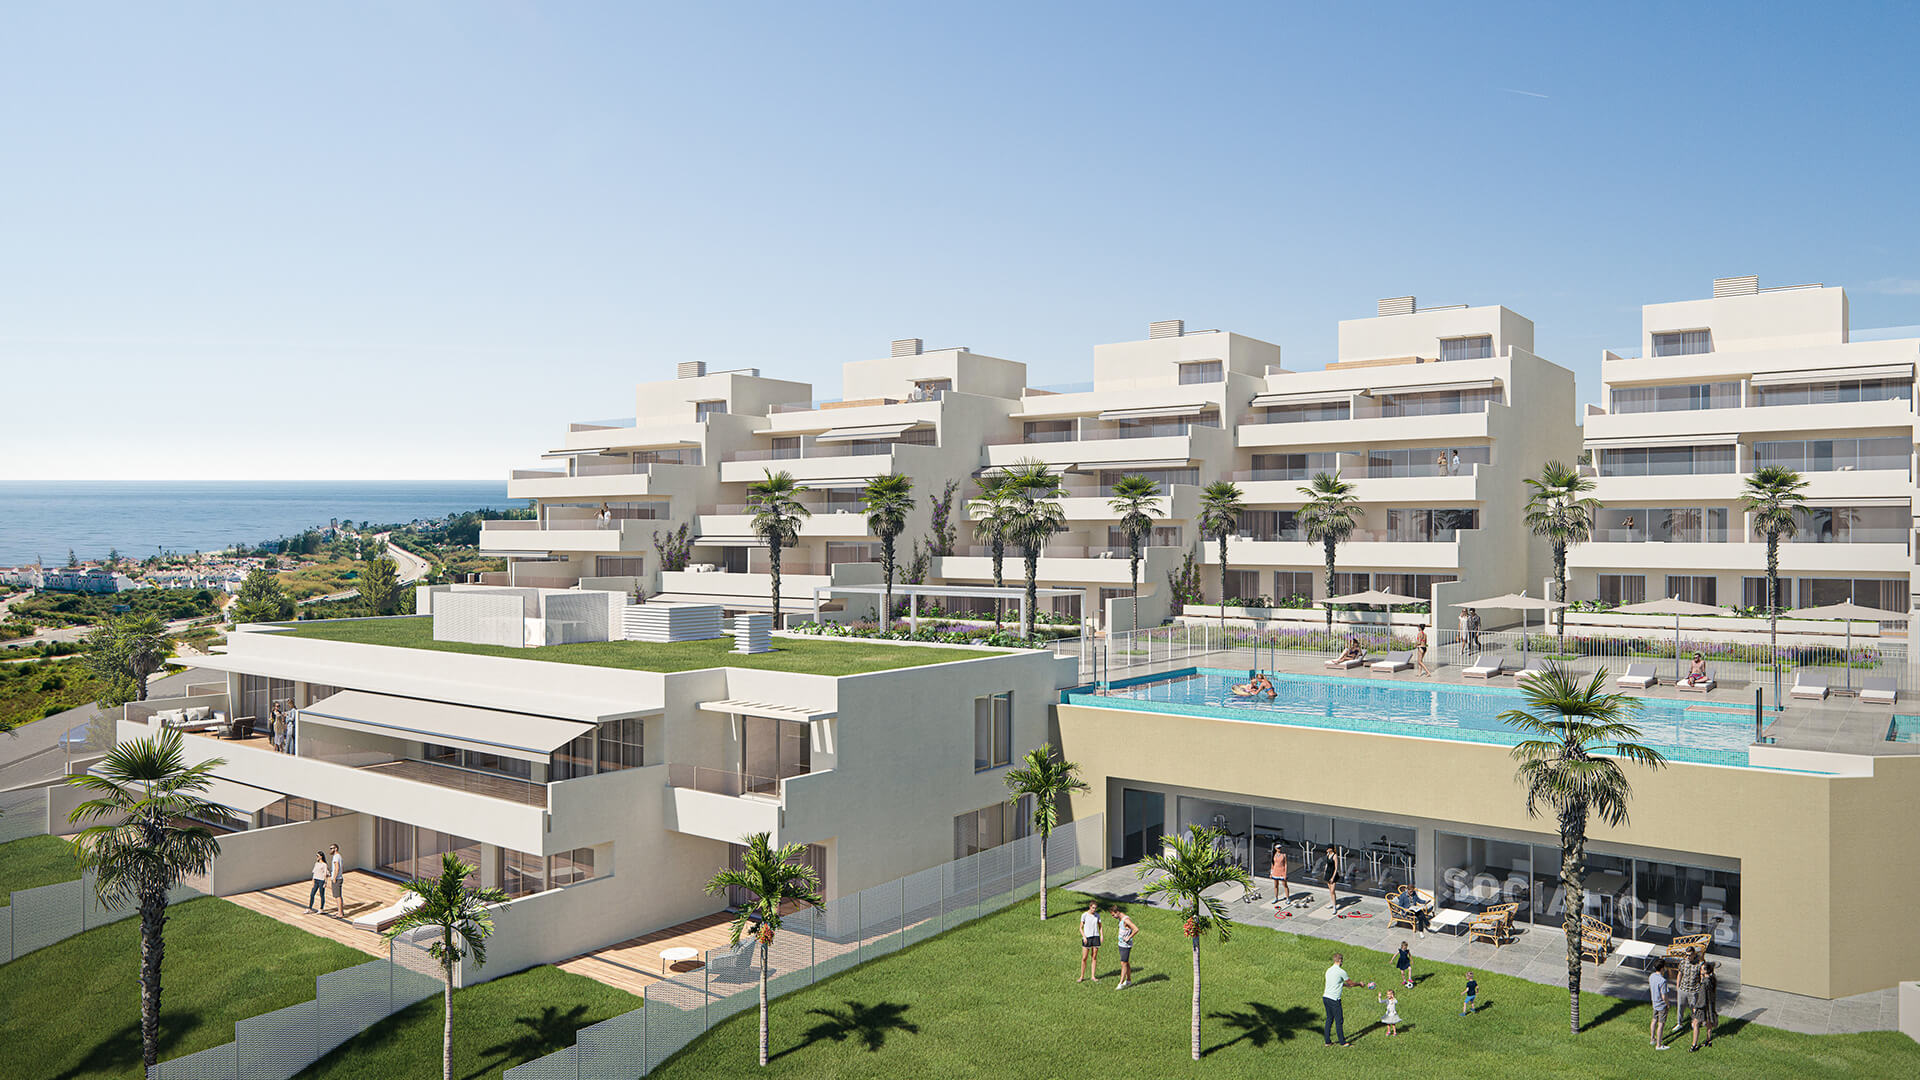 Isea Estepona - New Apartment Project For Sale